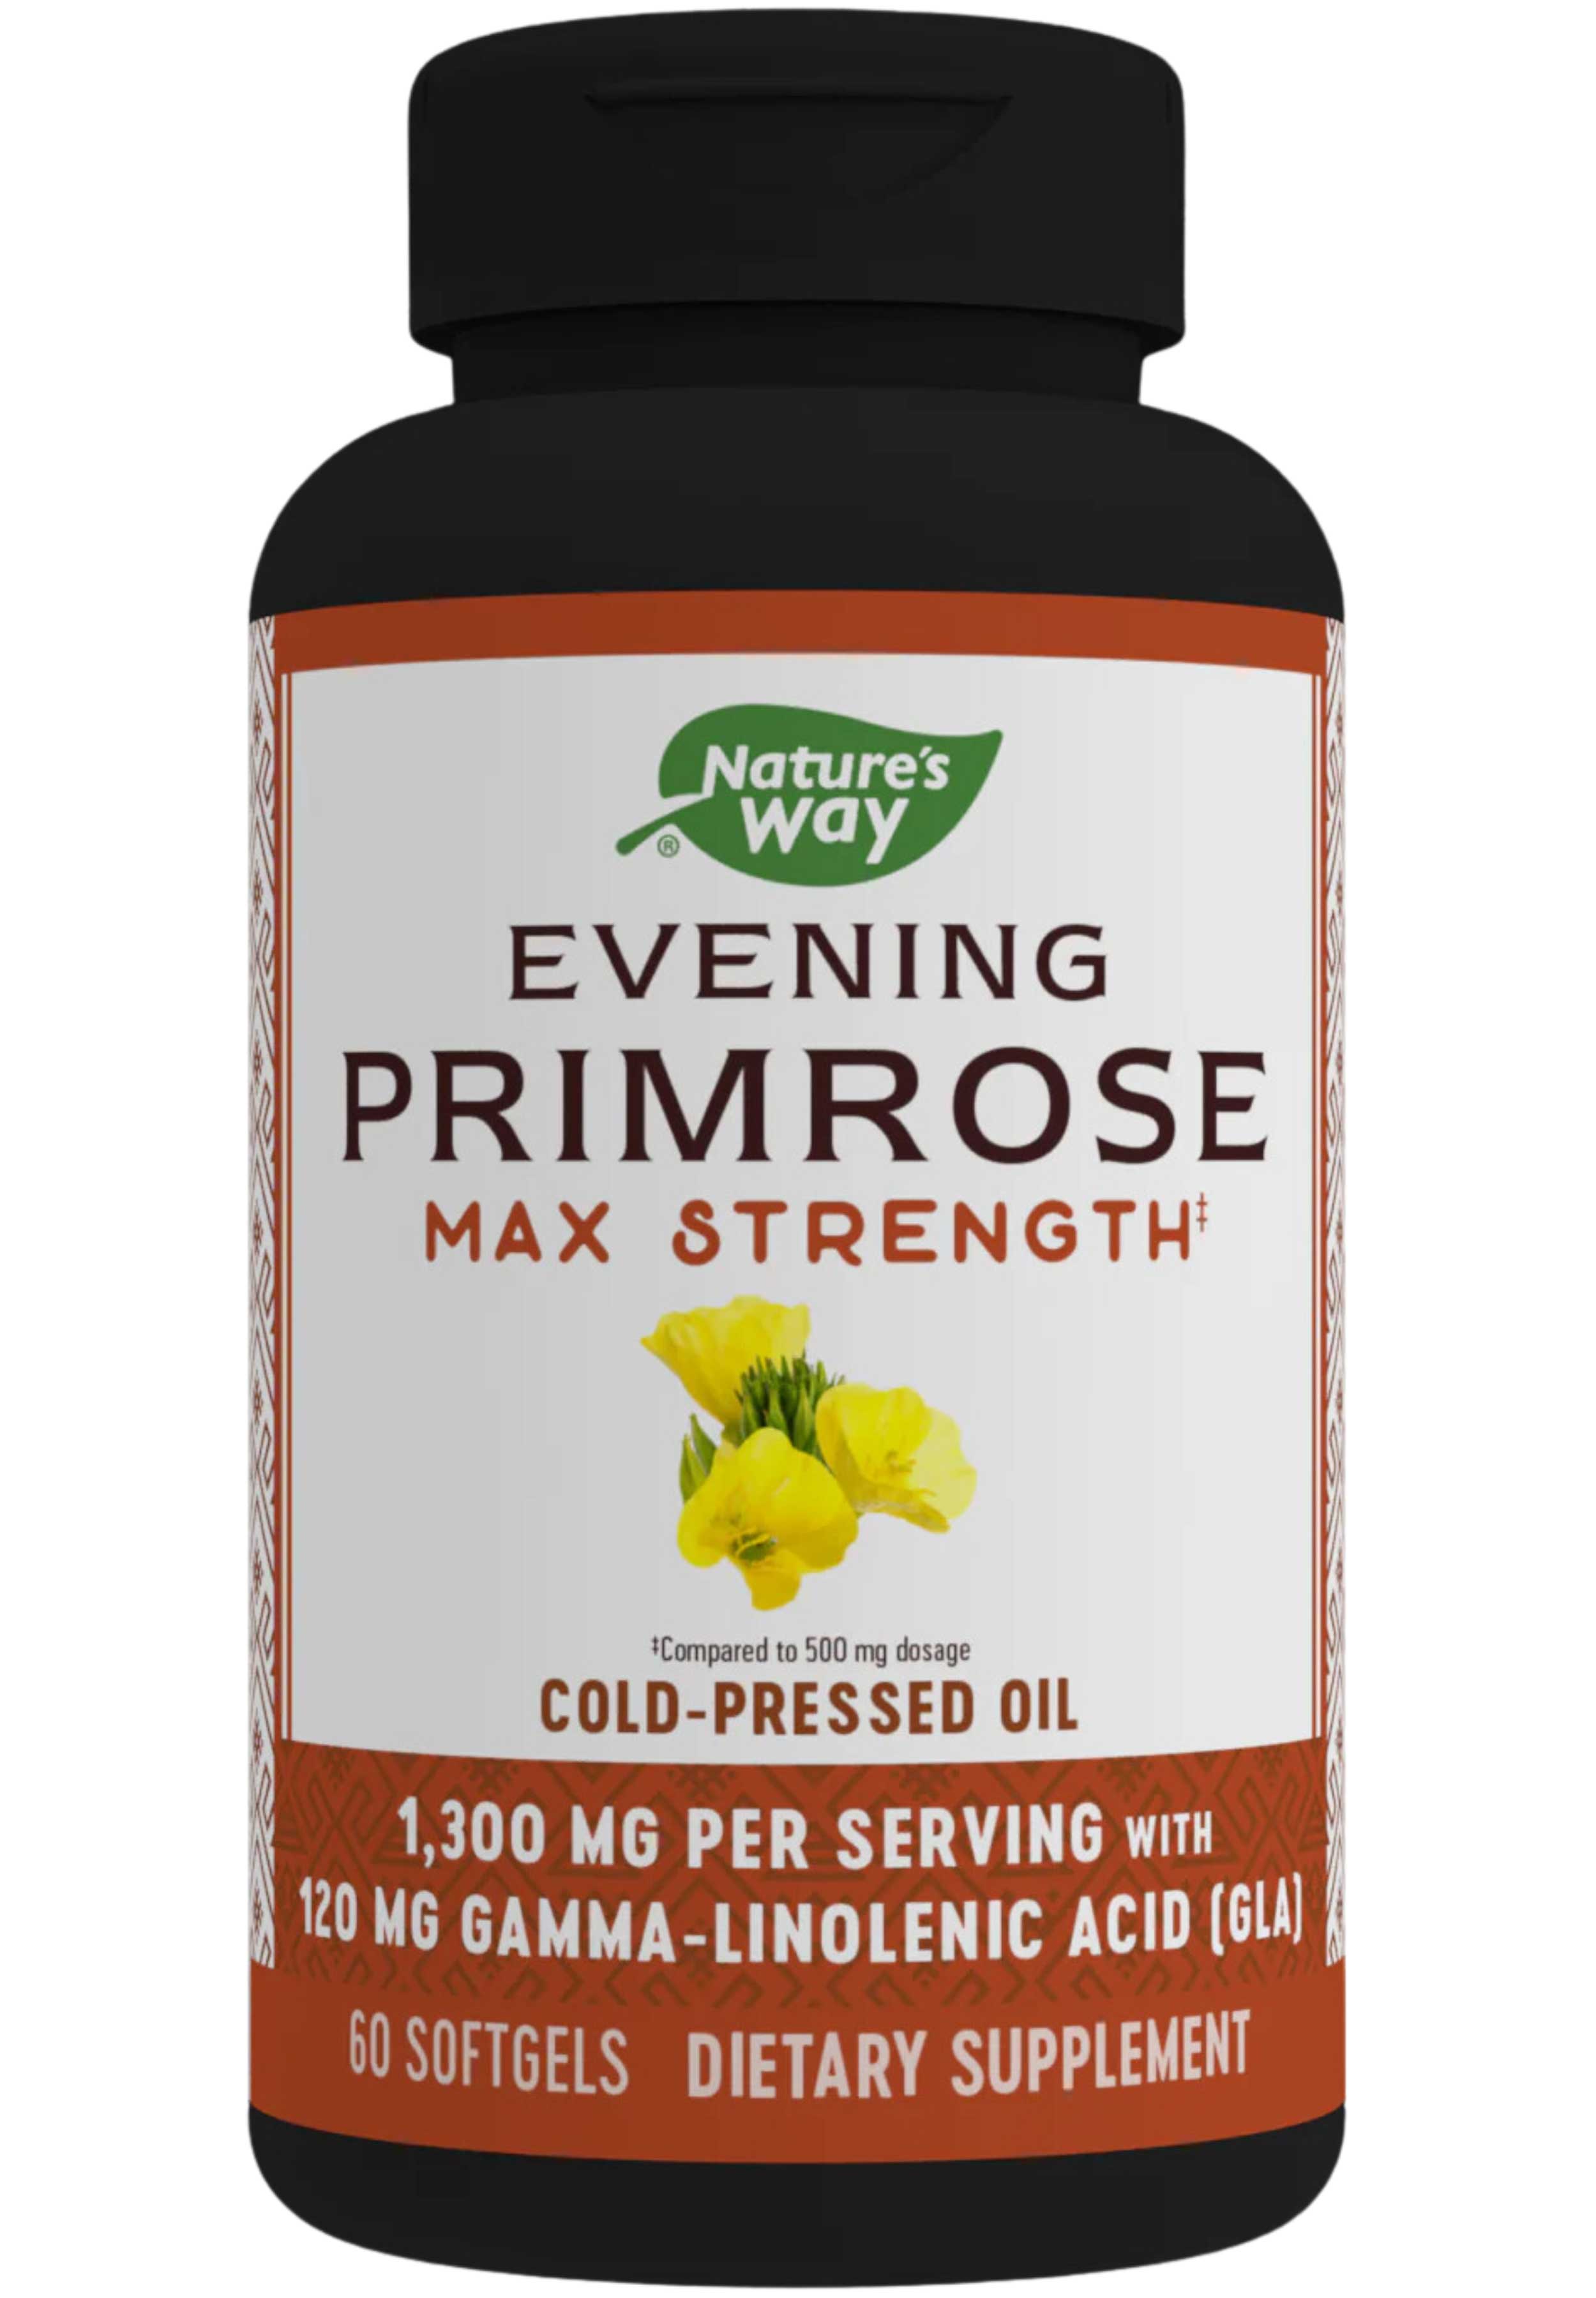 Nature's Way Evening Primrose Max Strength 1300 mg